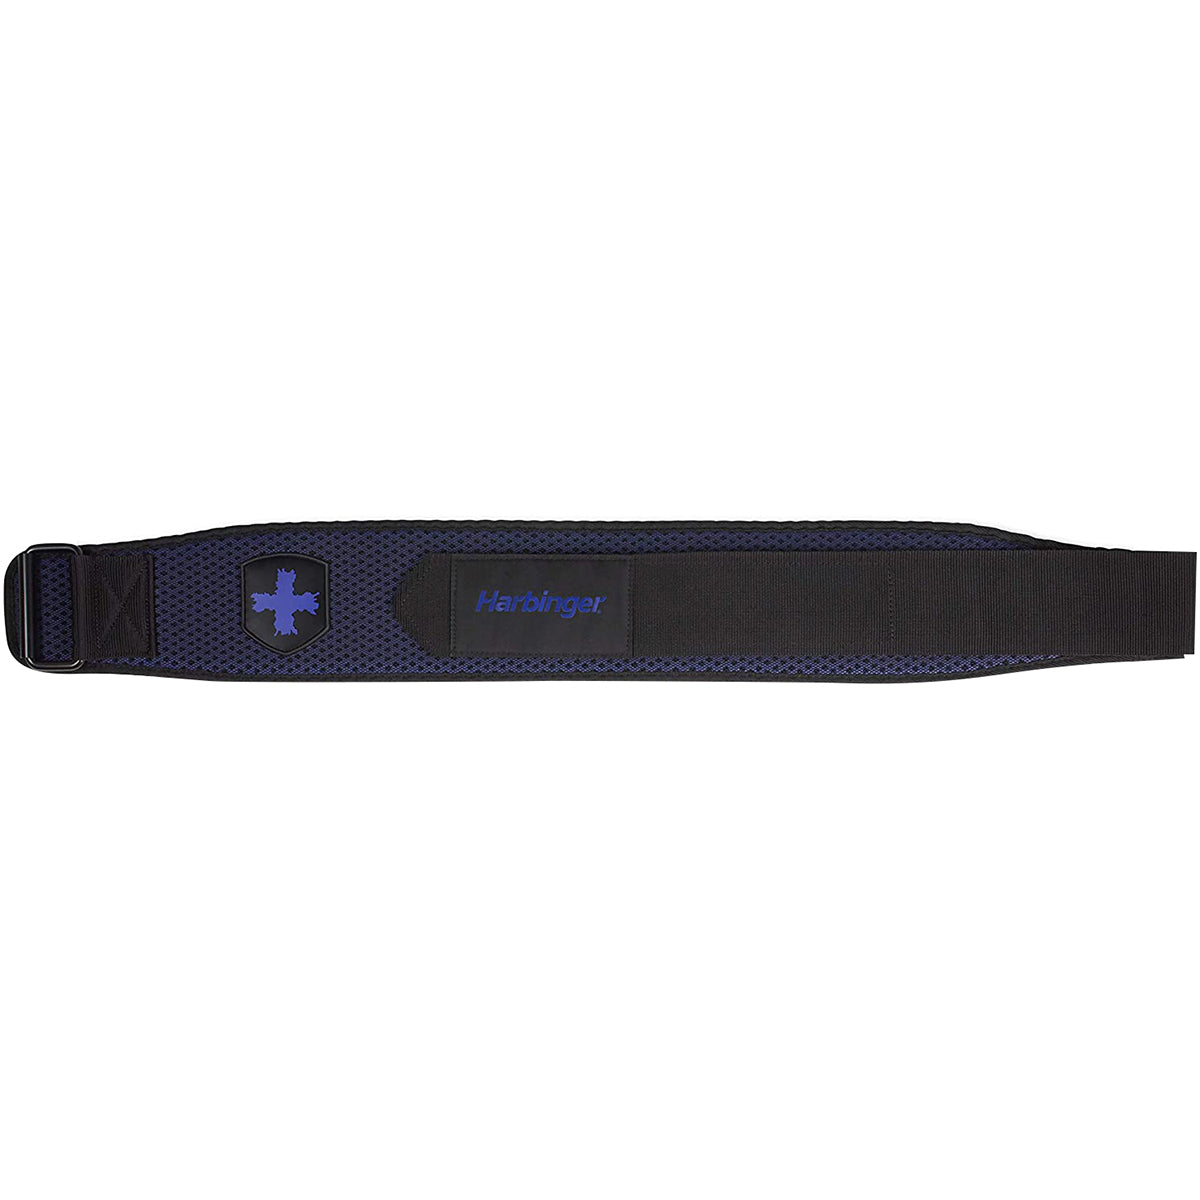 Harbinger HexCore 4.5" Weight Lifting Belt - Blue Harbinger